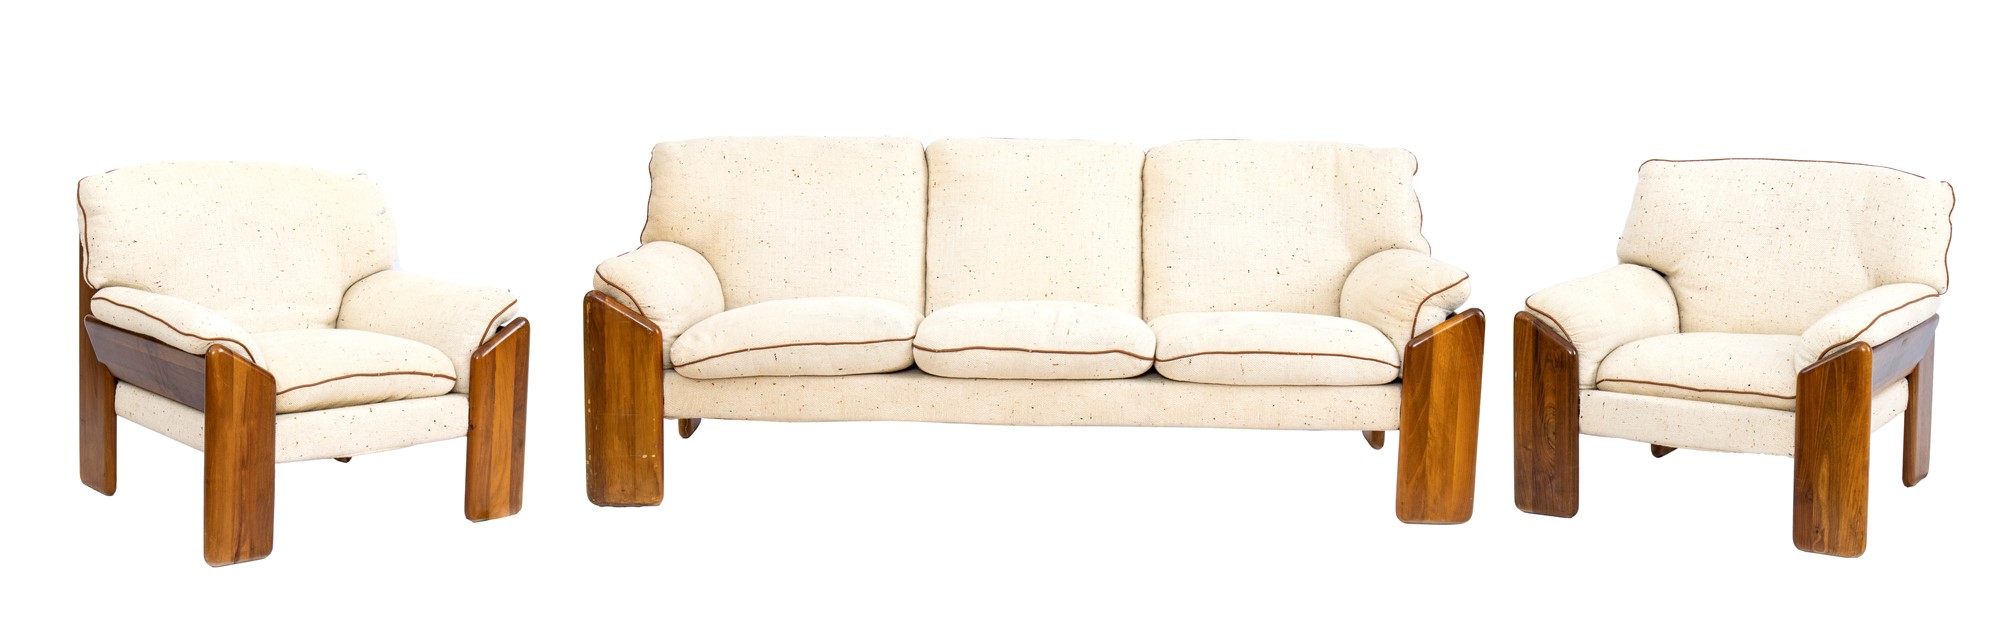 Mario Marenco Foggia 1933-2019 Lounge Furniture by Mobilgirgi consists of three-seater sofa and two - Image 2 of 23